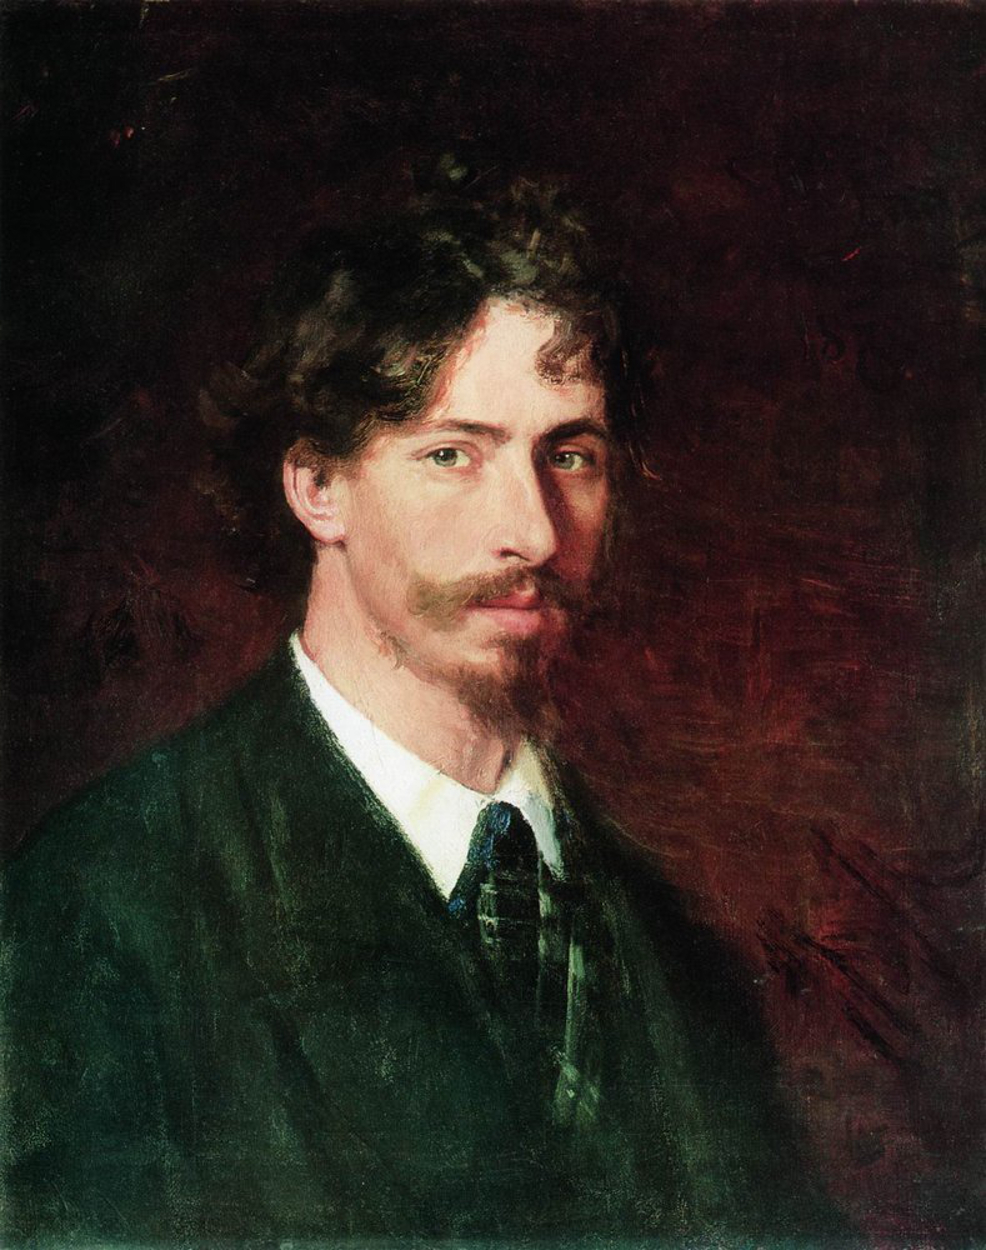 Ilya Repin - August 5, 1844 - Spetember 29, 1930